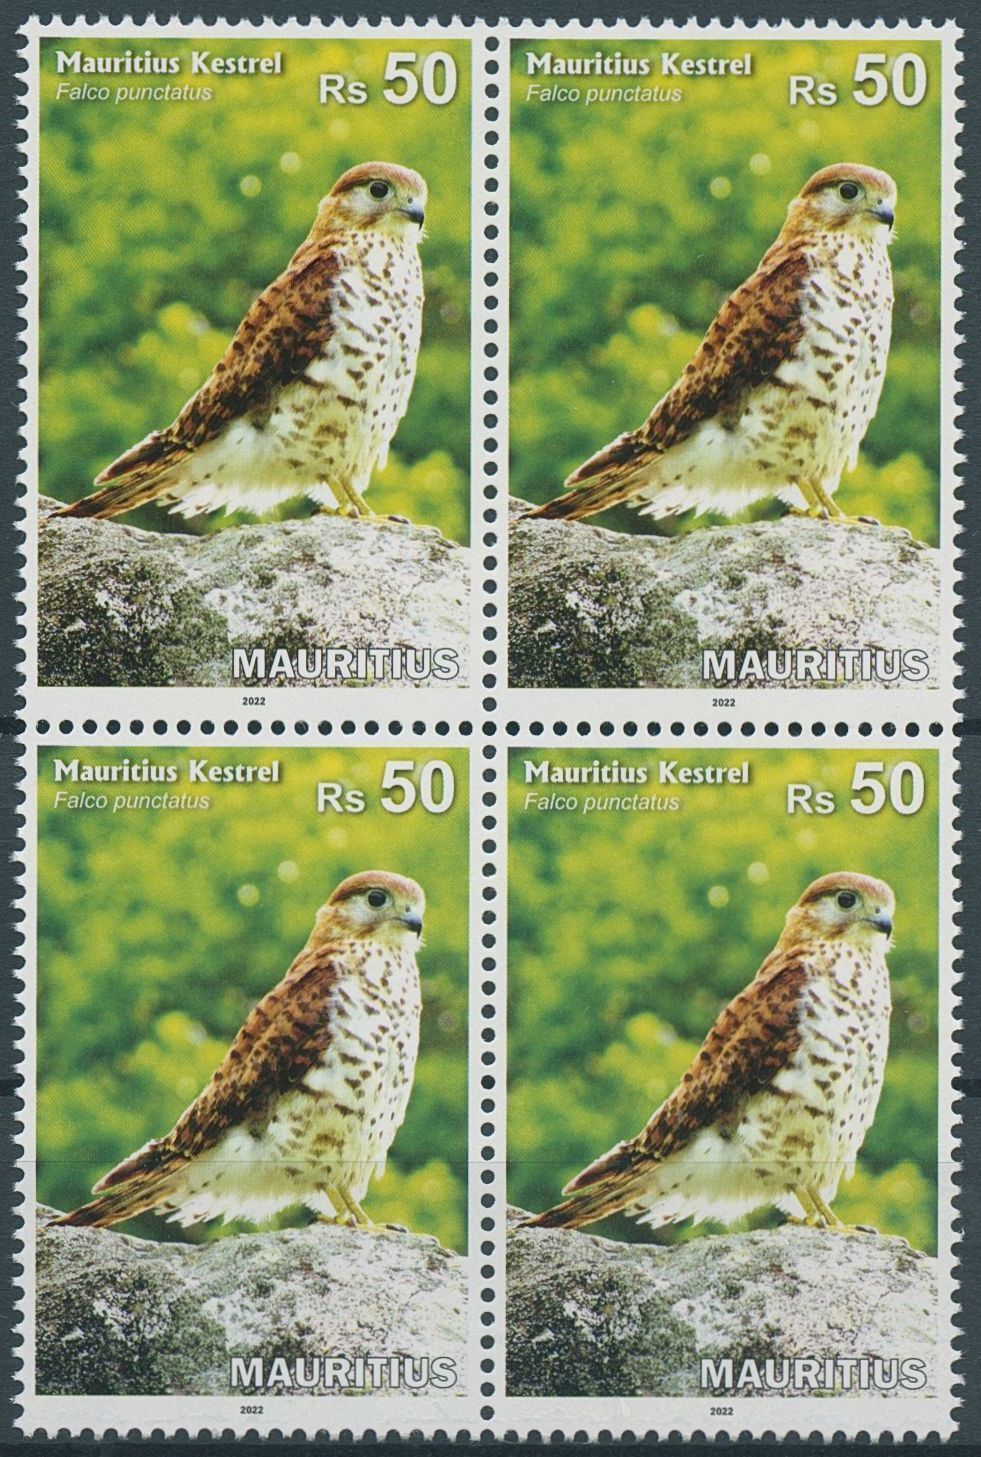 Mauritius 2022 MNH Birds on Stamps Kestrel National Bird Raptors 4v Block